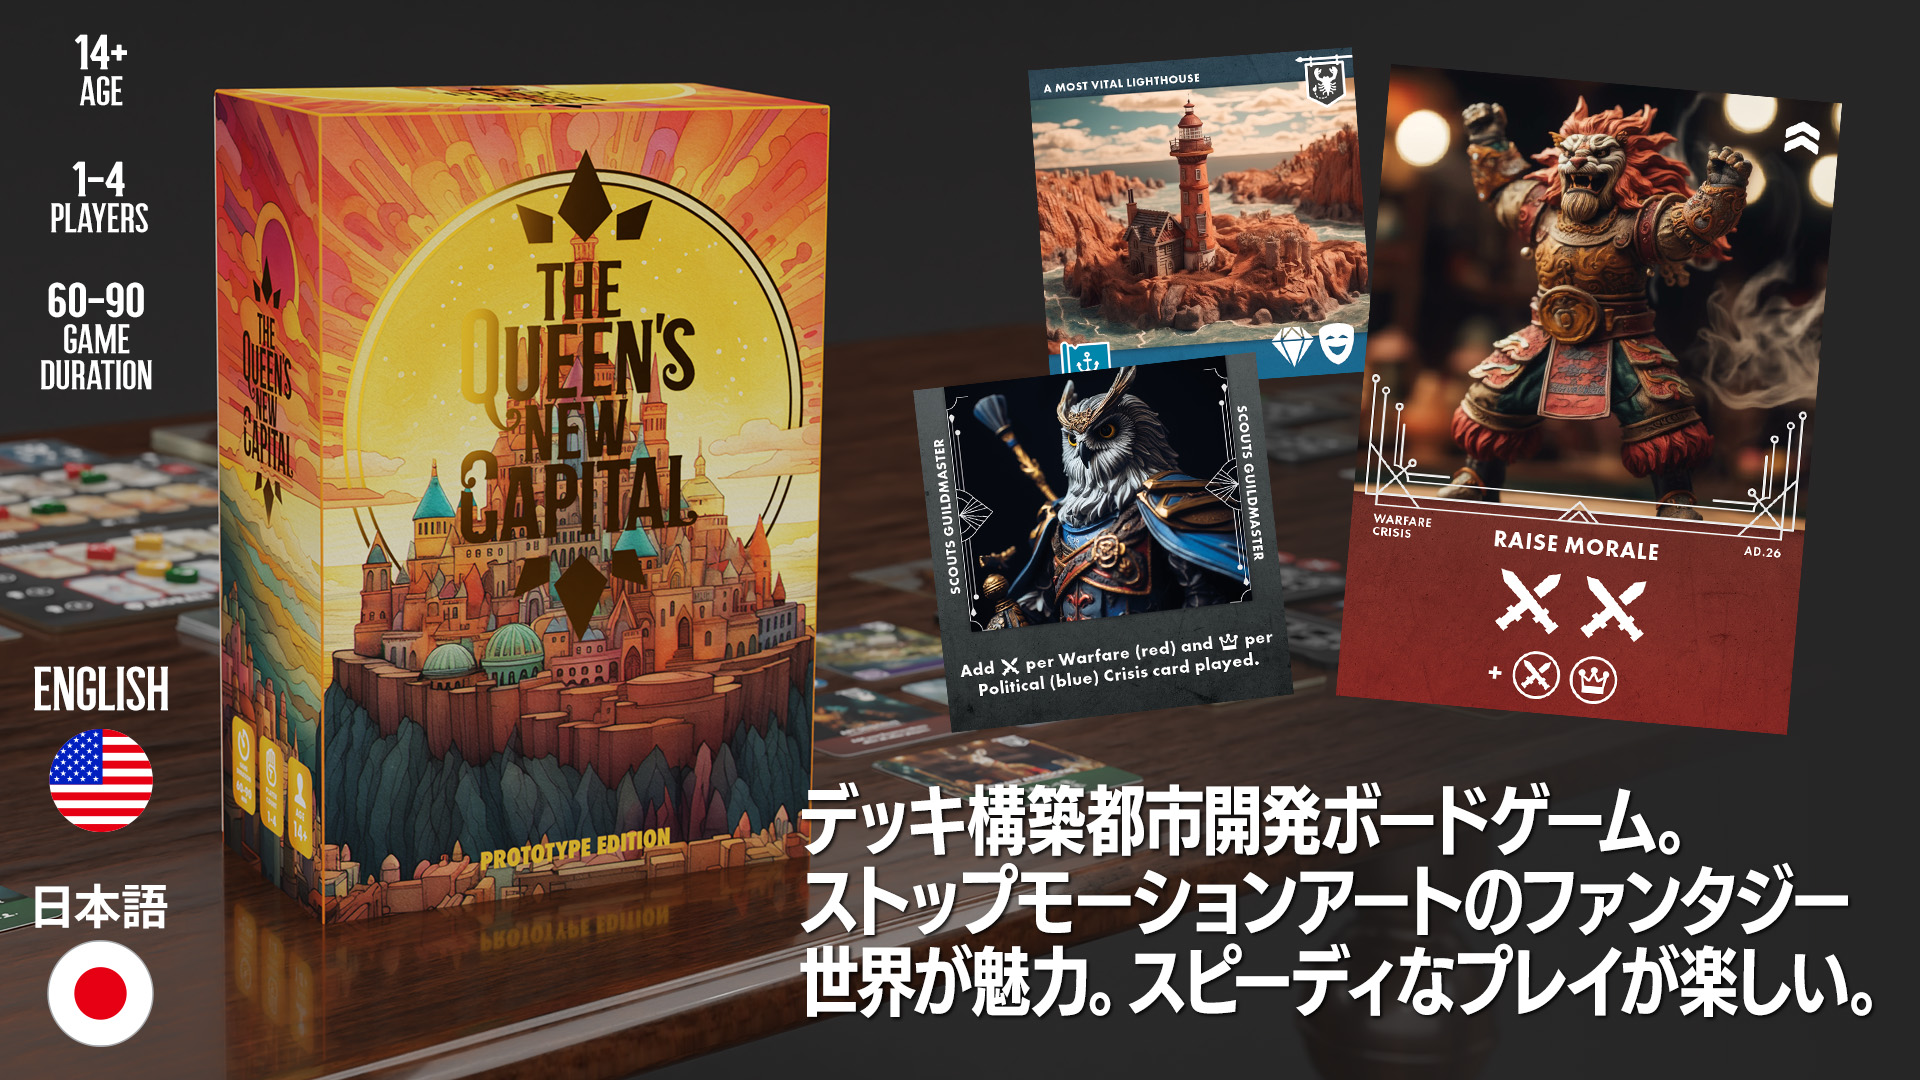 The Queen's New Capital – Tokyo Spiel Festival2023 -浅草ボード